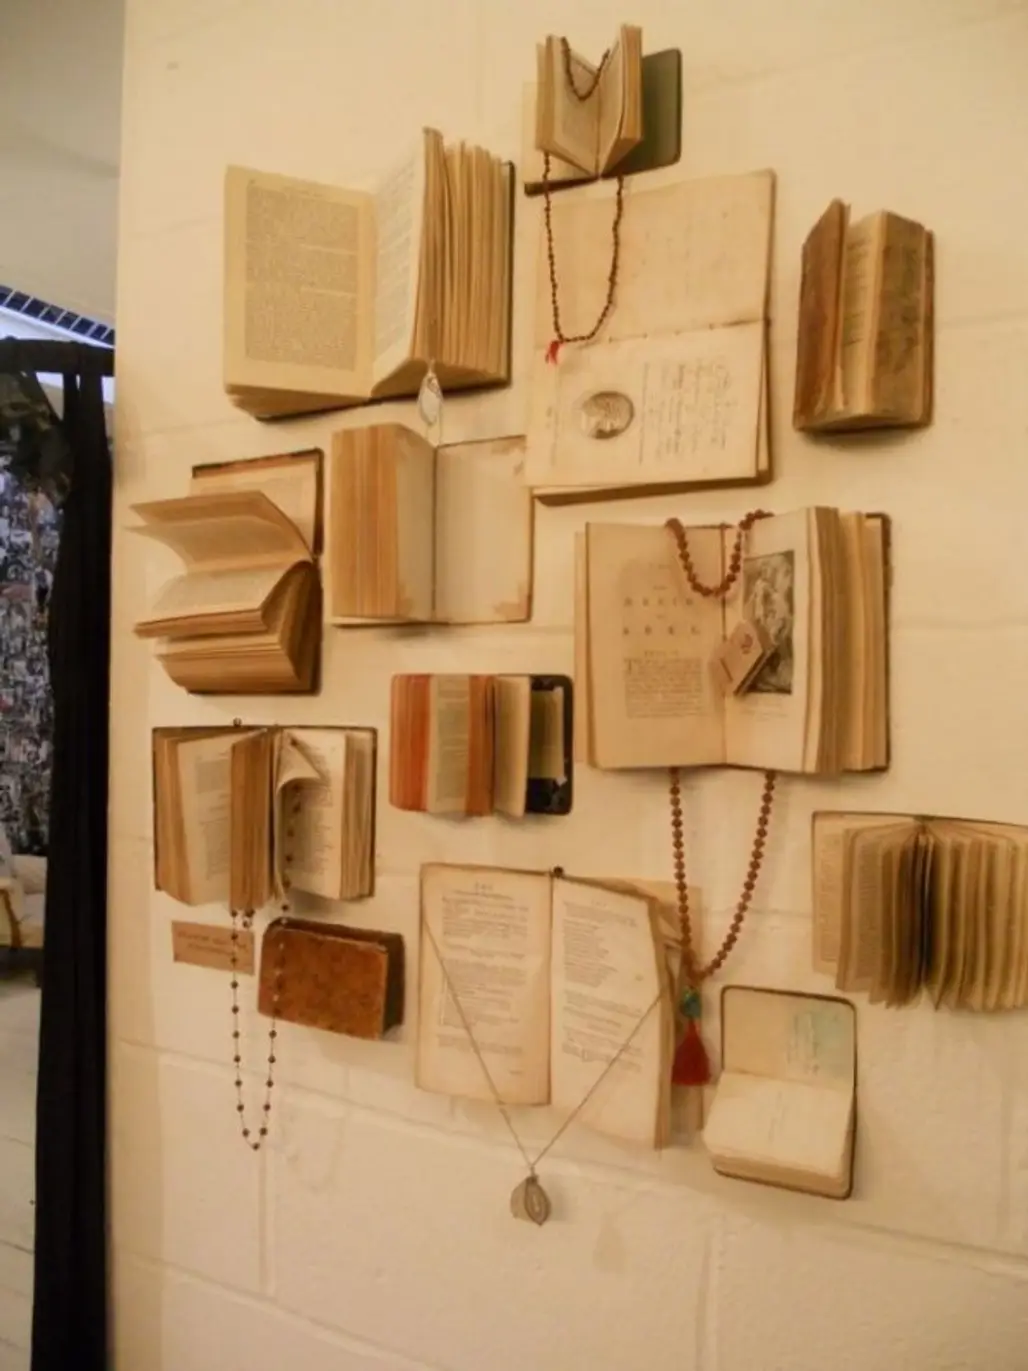 Books on Walls